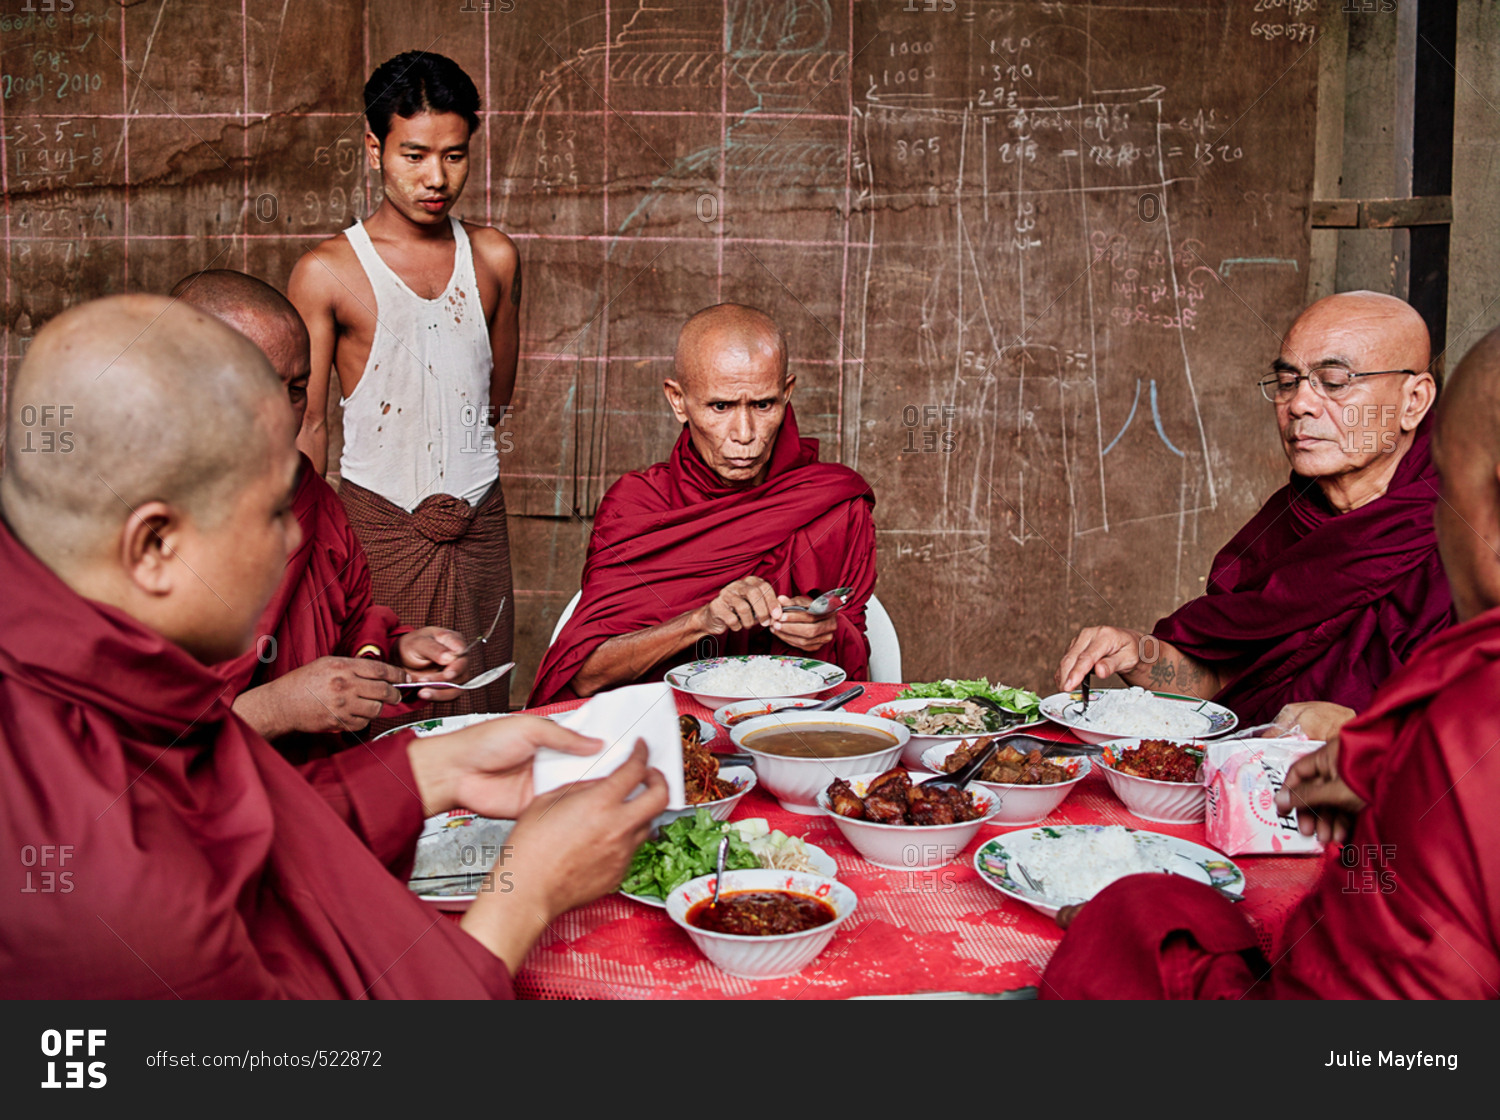 Монахи едят мясо. Монах Монк Мьянма. Буддист блюда. Еда монахов Тибет. Еда буддийских монахов.